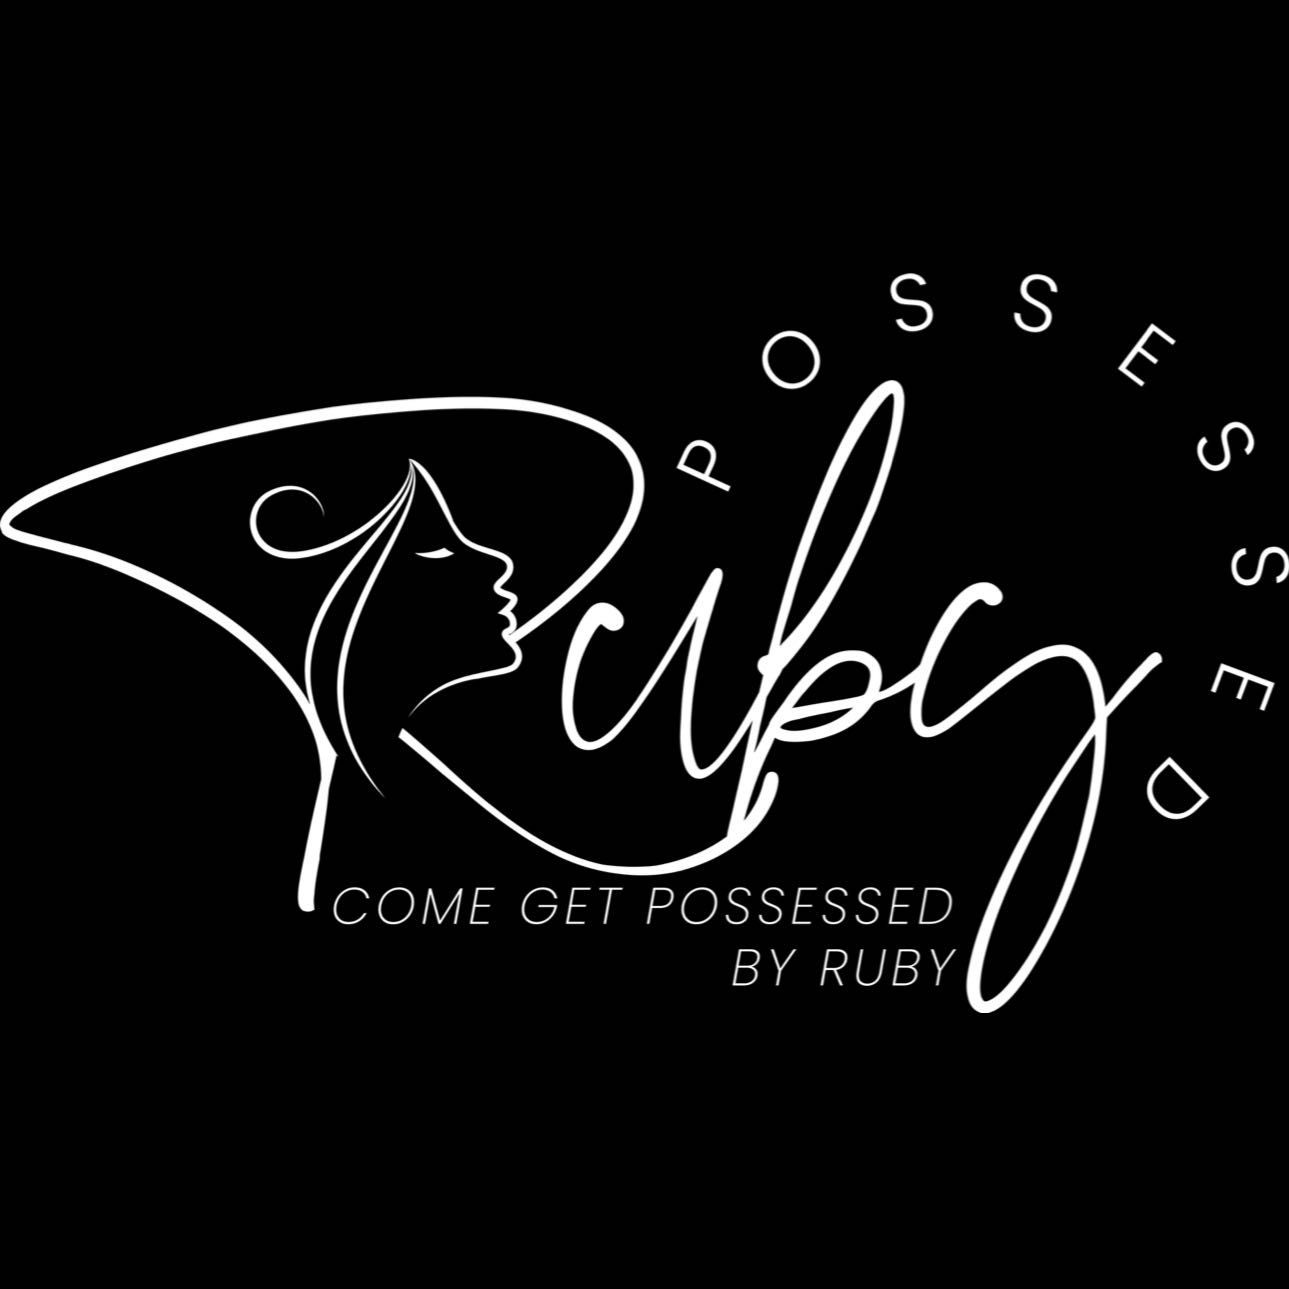 Ruby possessed LLC, Ohio Ave, Barberton, 44203